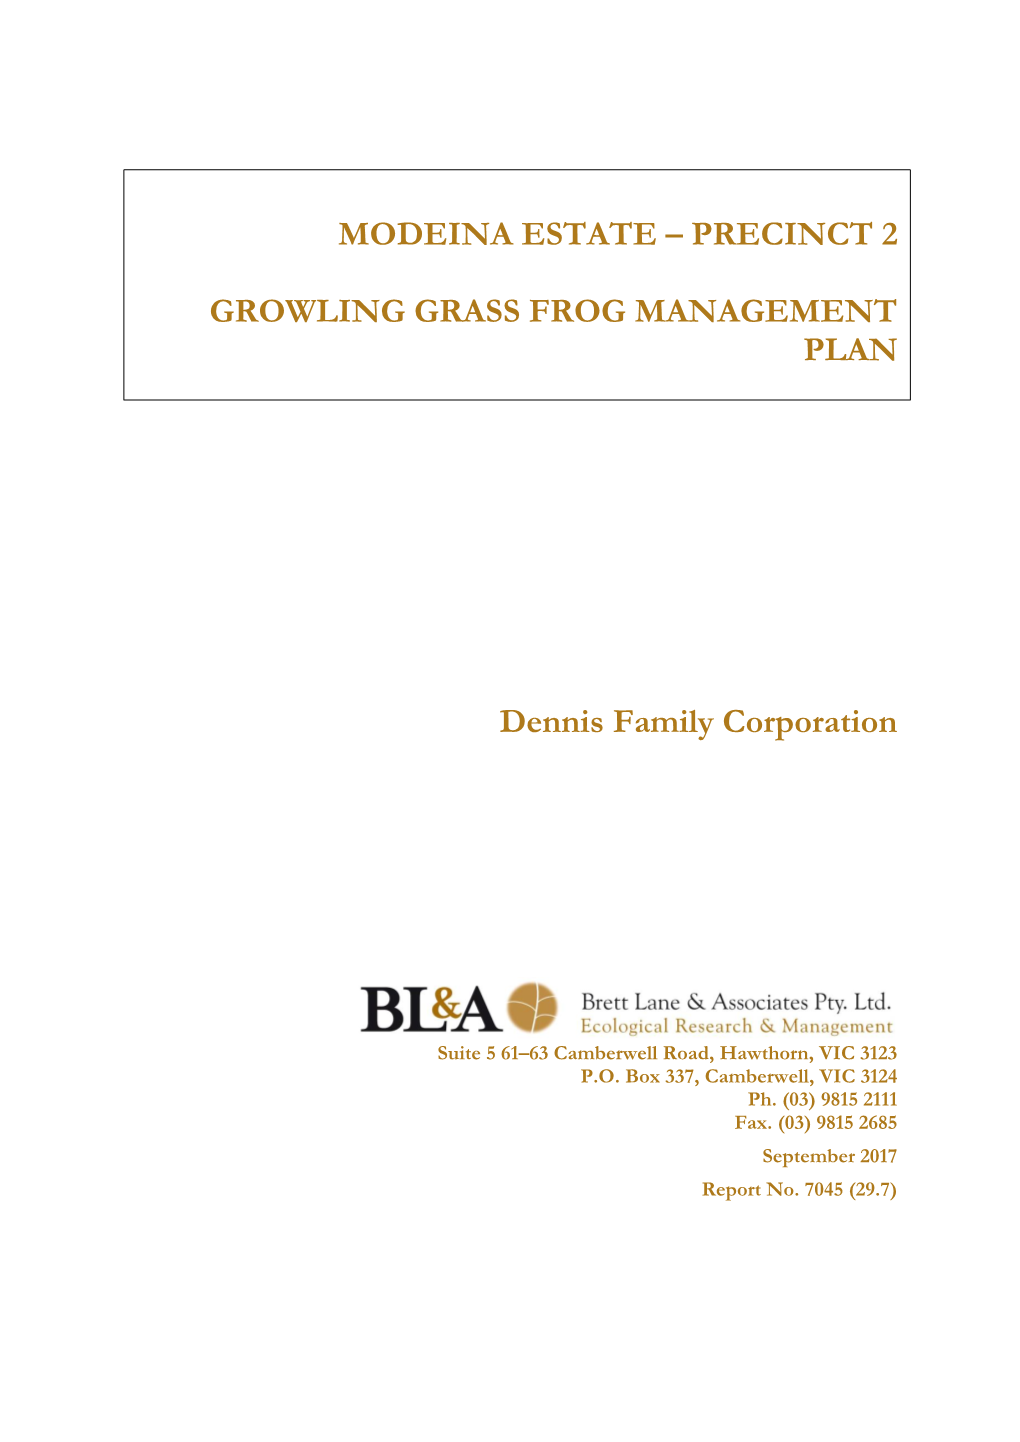 Modeina Estate, Precinct 2 – Growling Grass Frog Management Plan Report No